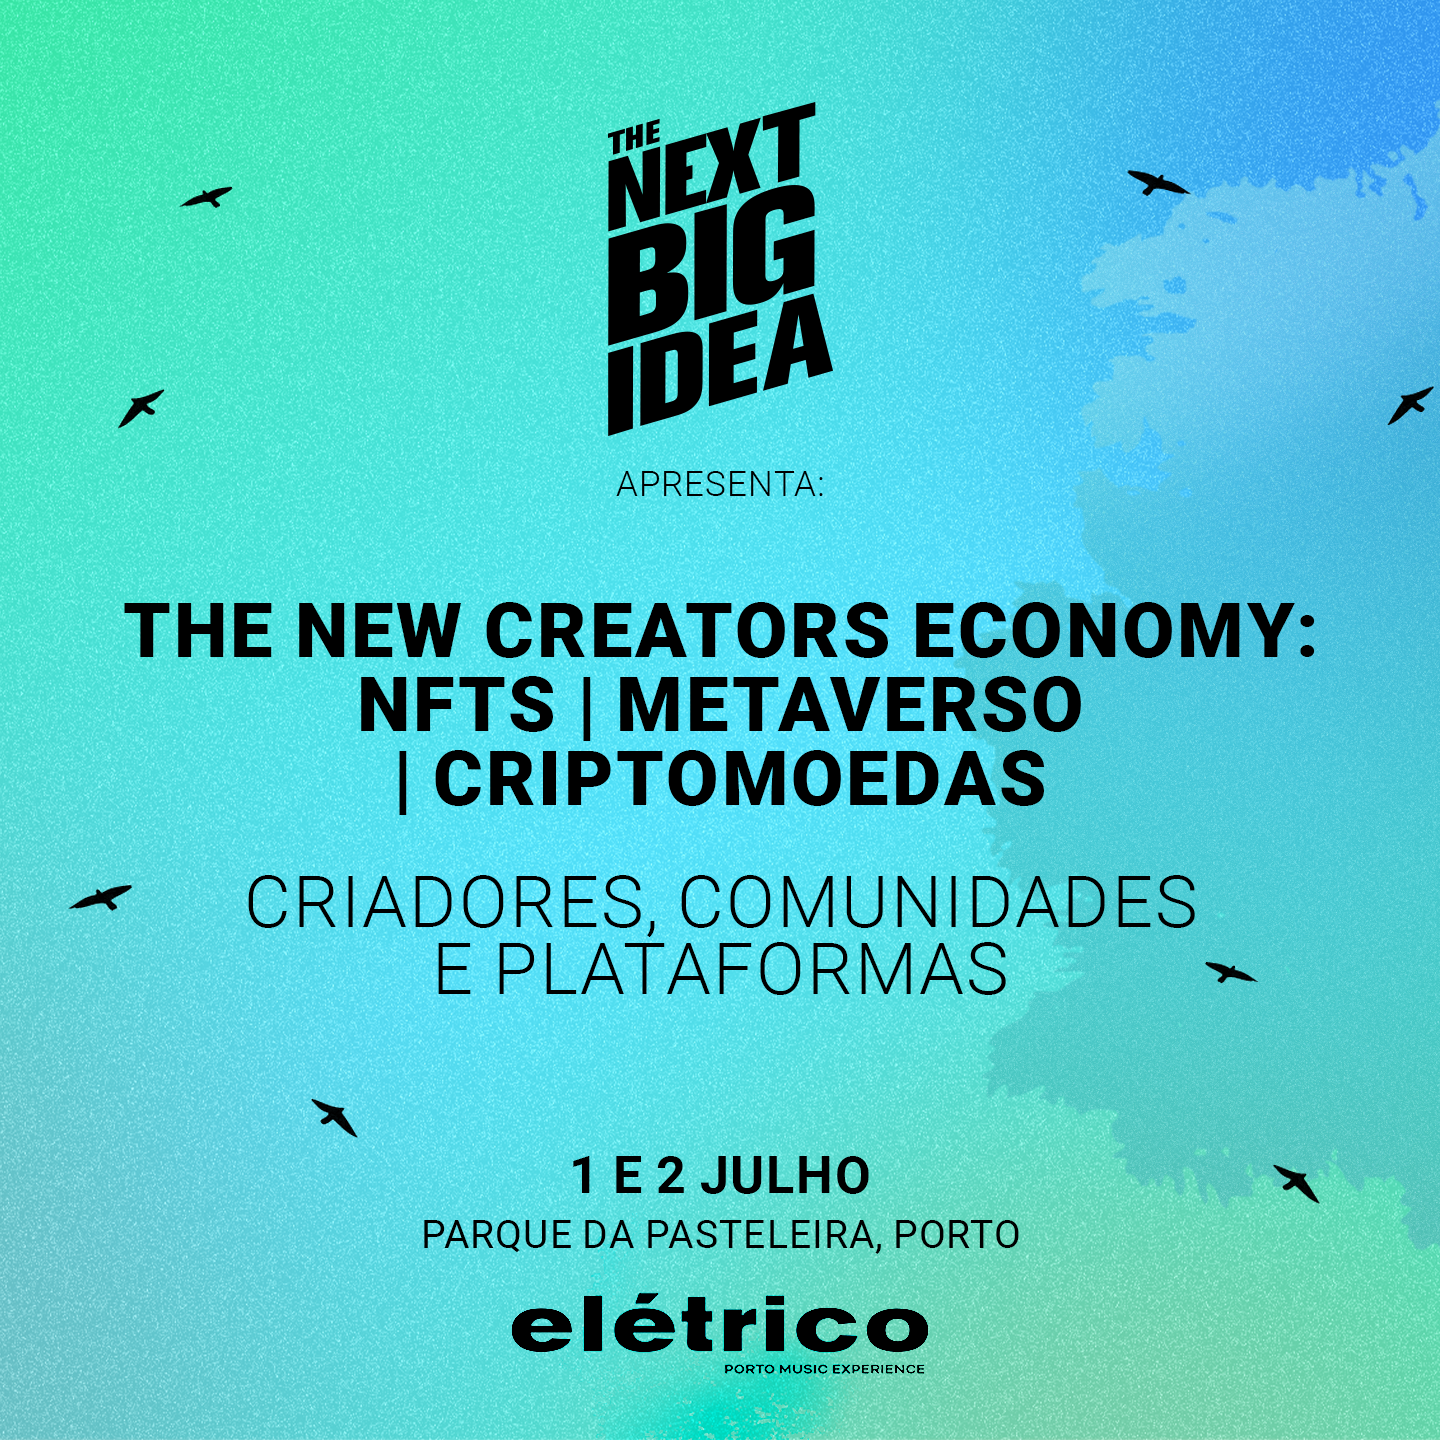 Festival Elétrico - Conferência "The New Creators Economy"